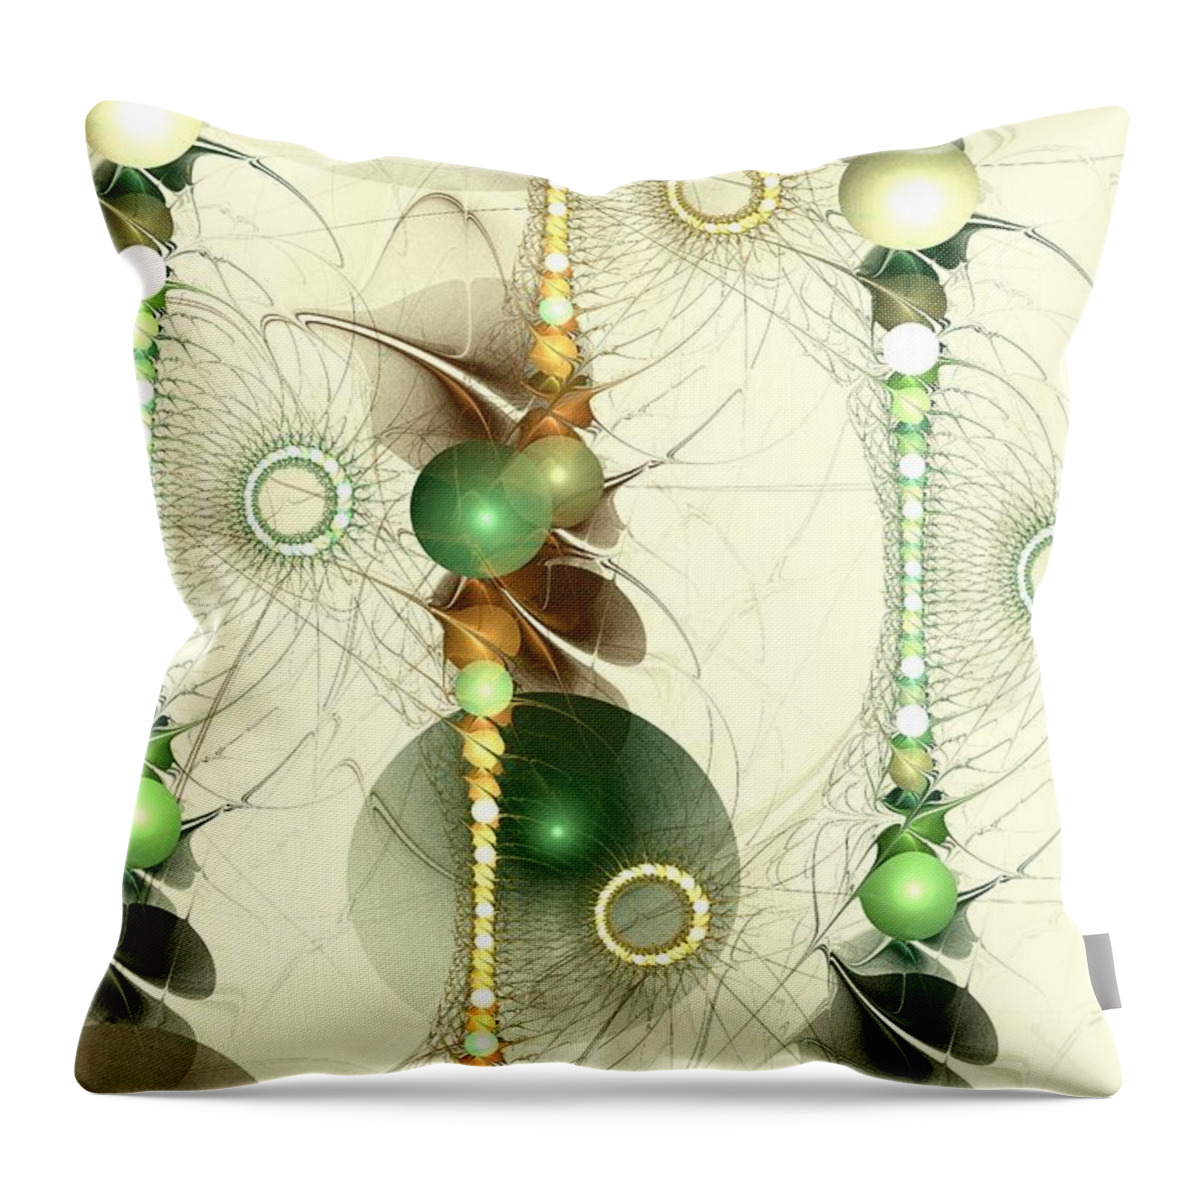 Malakhova Throw Pillow featuring the digital art Alignment by Anastasiya Malakhova